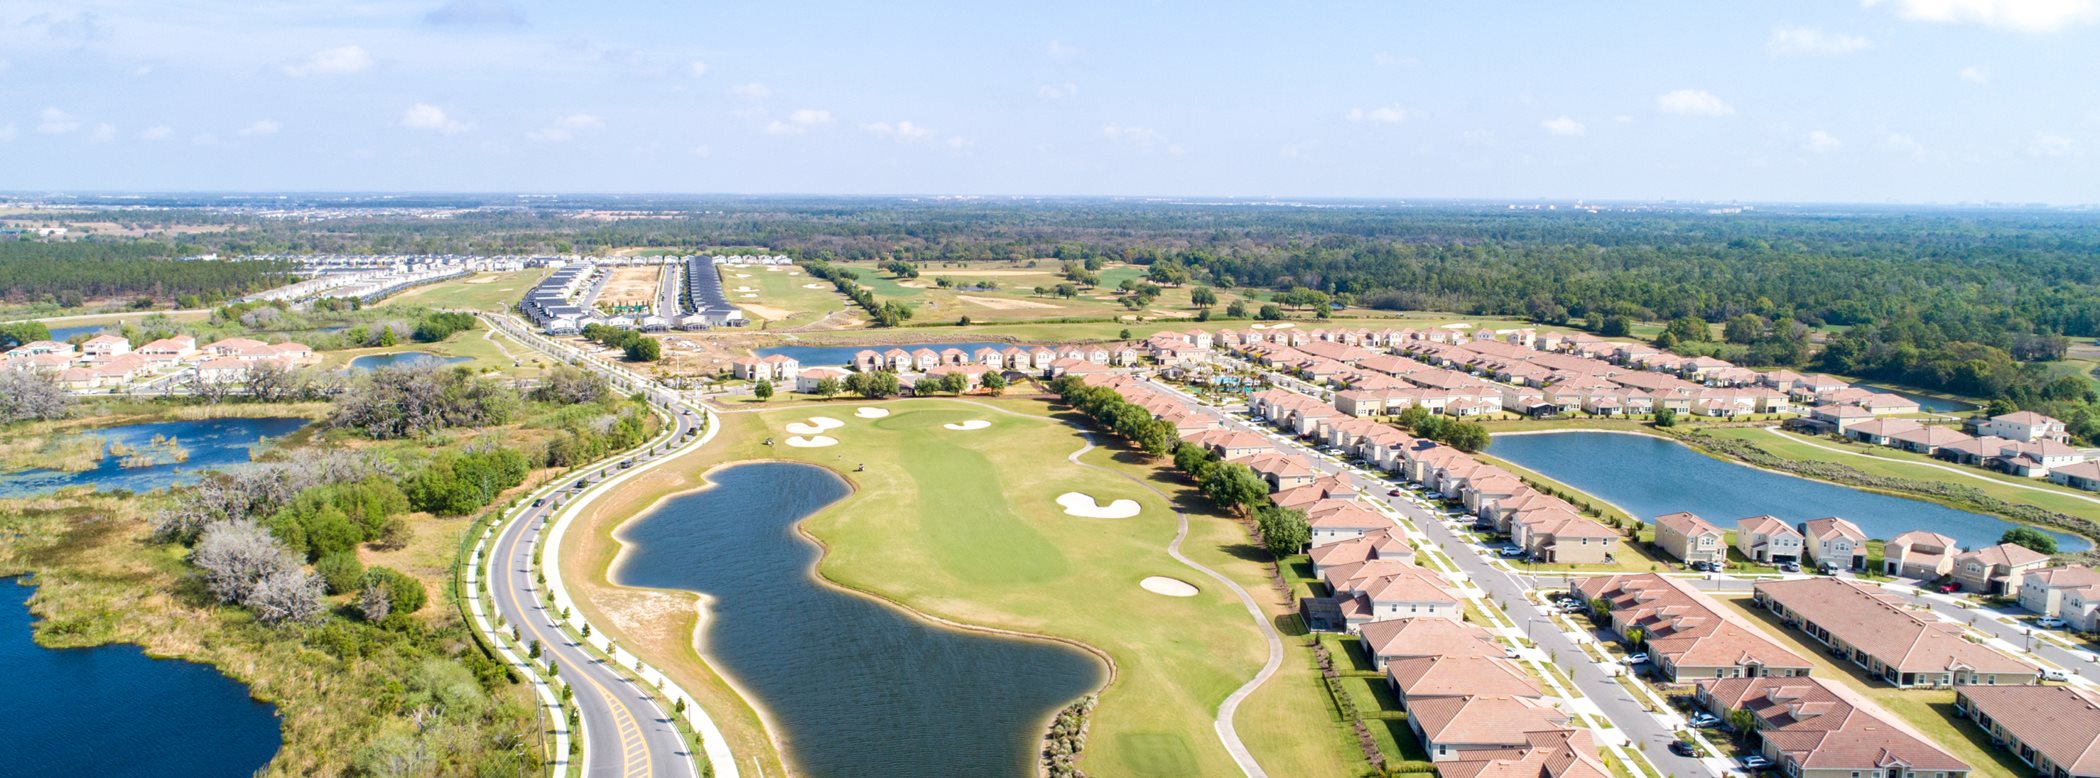 ChampionsGate Golf Course Aerial